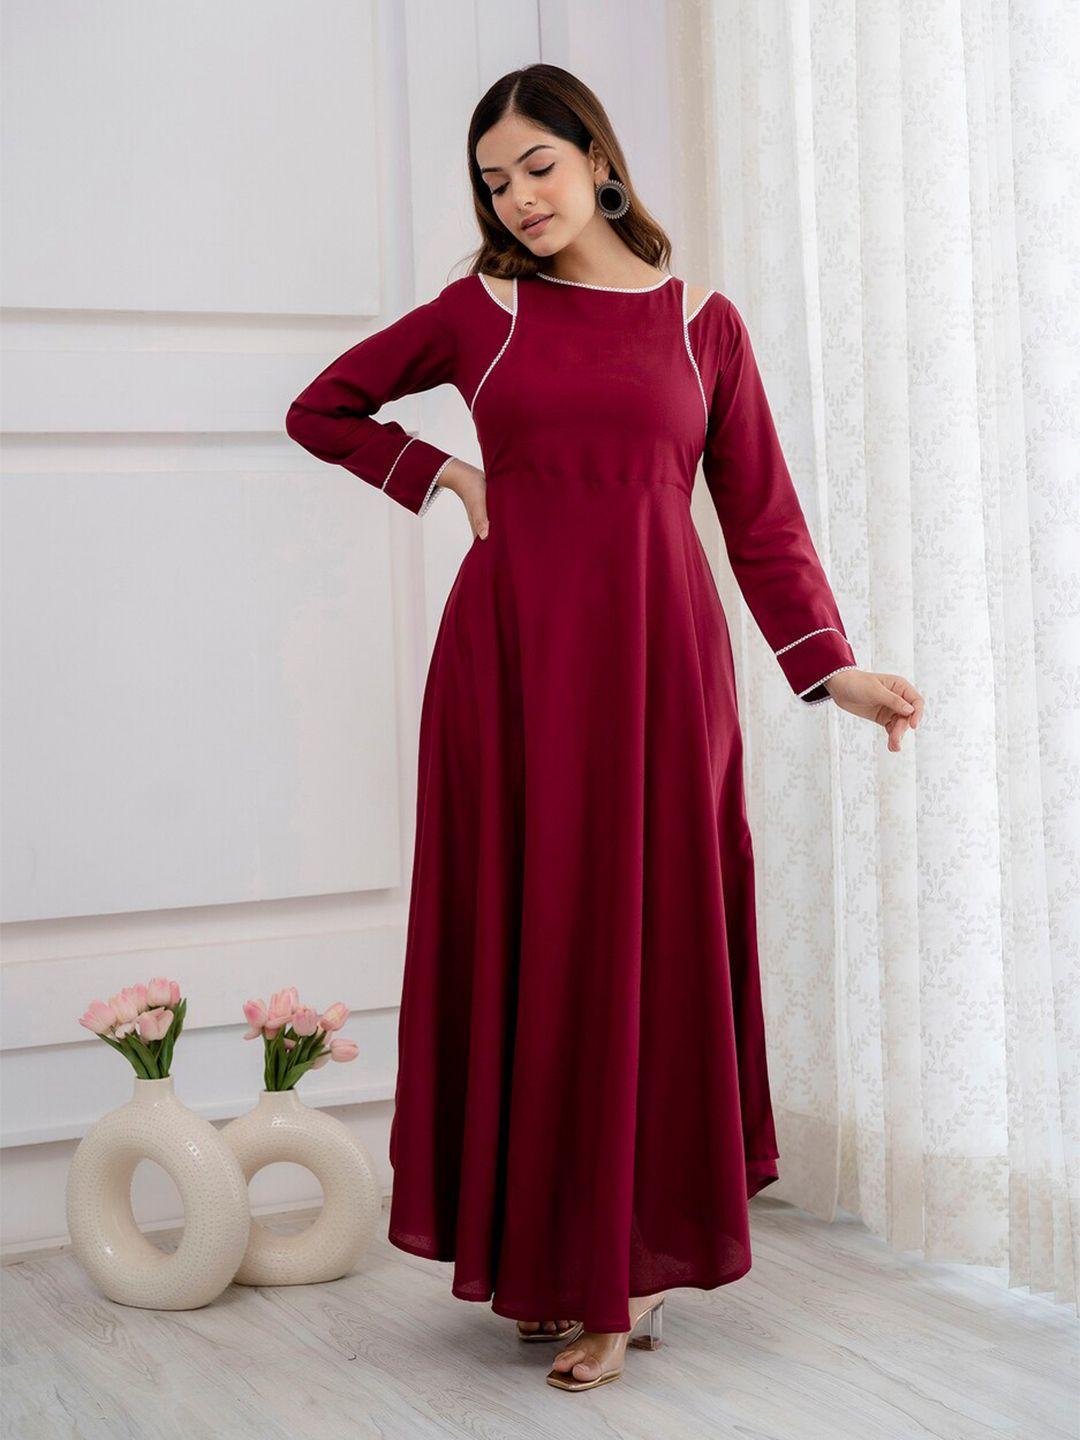 purshottam wala maroon applique maxi dress